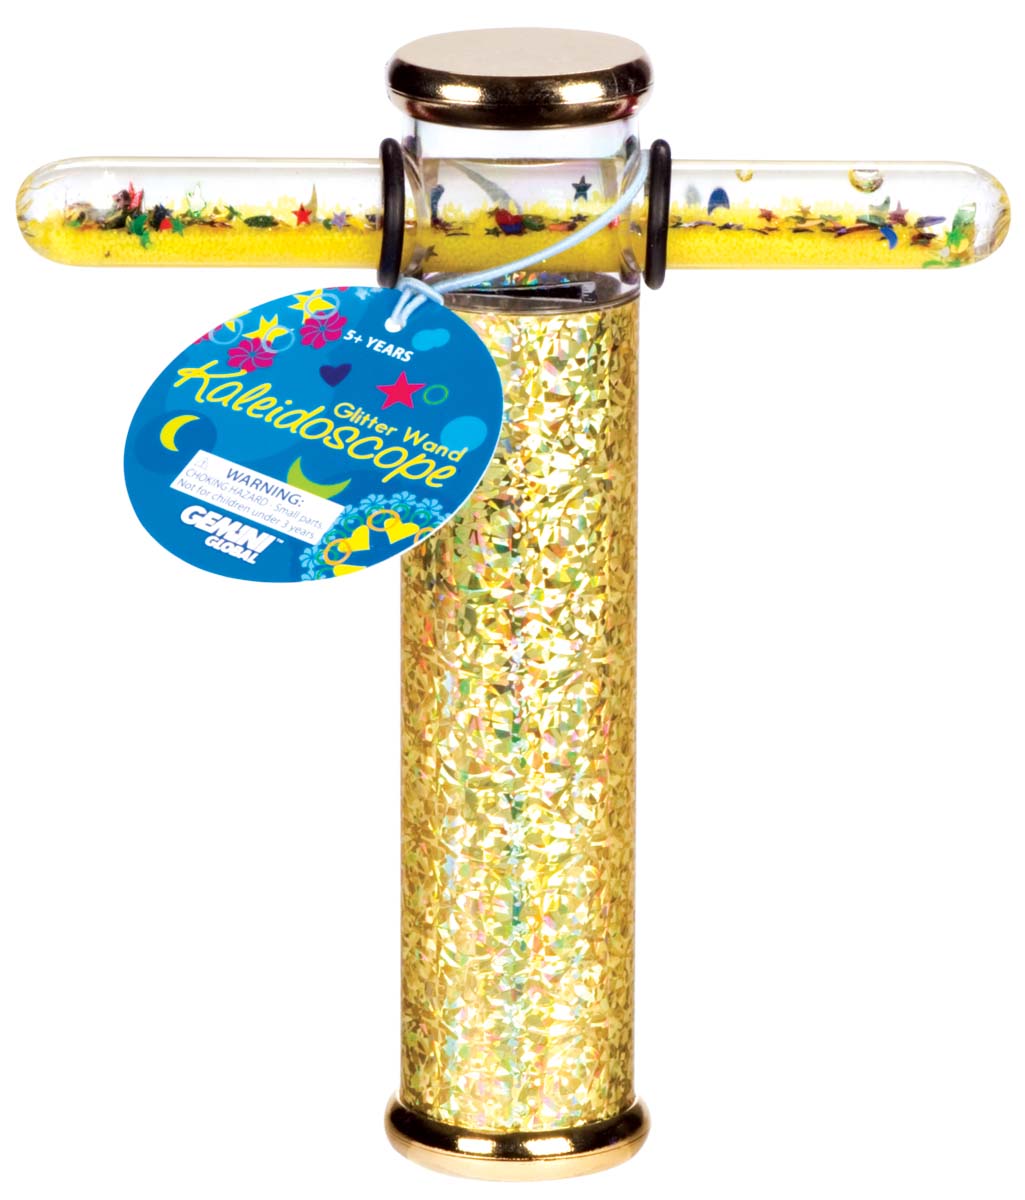 Toysmith Glitter Wand Kldscope